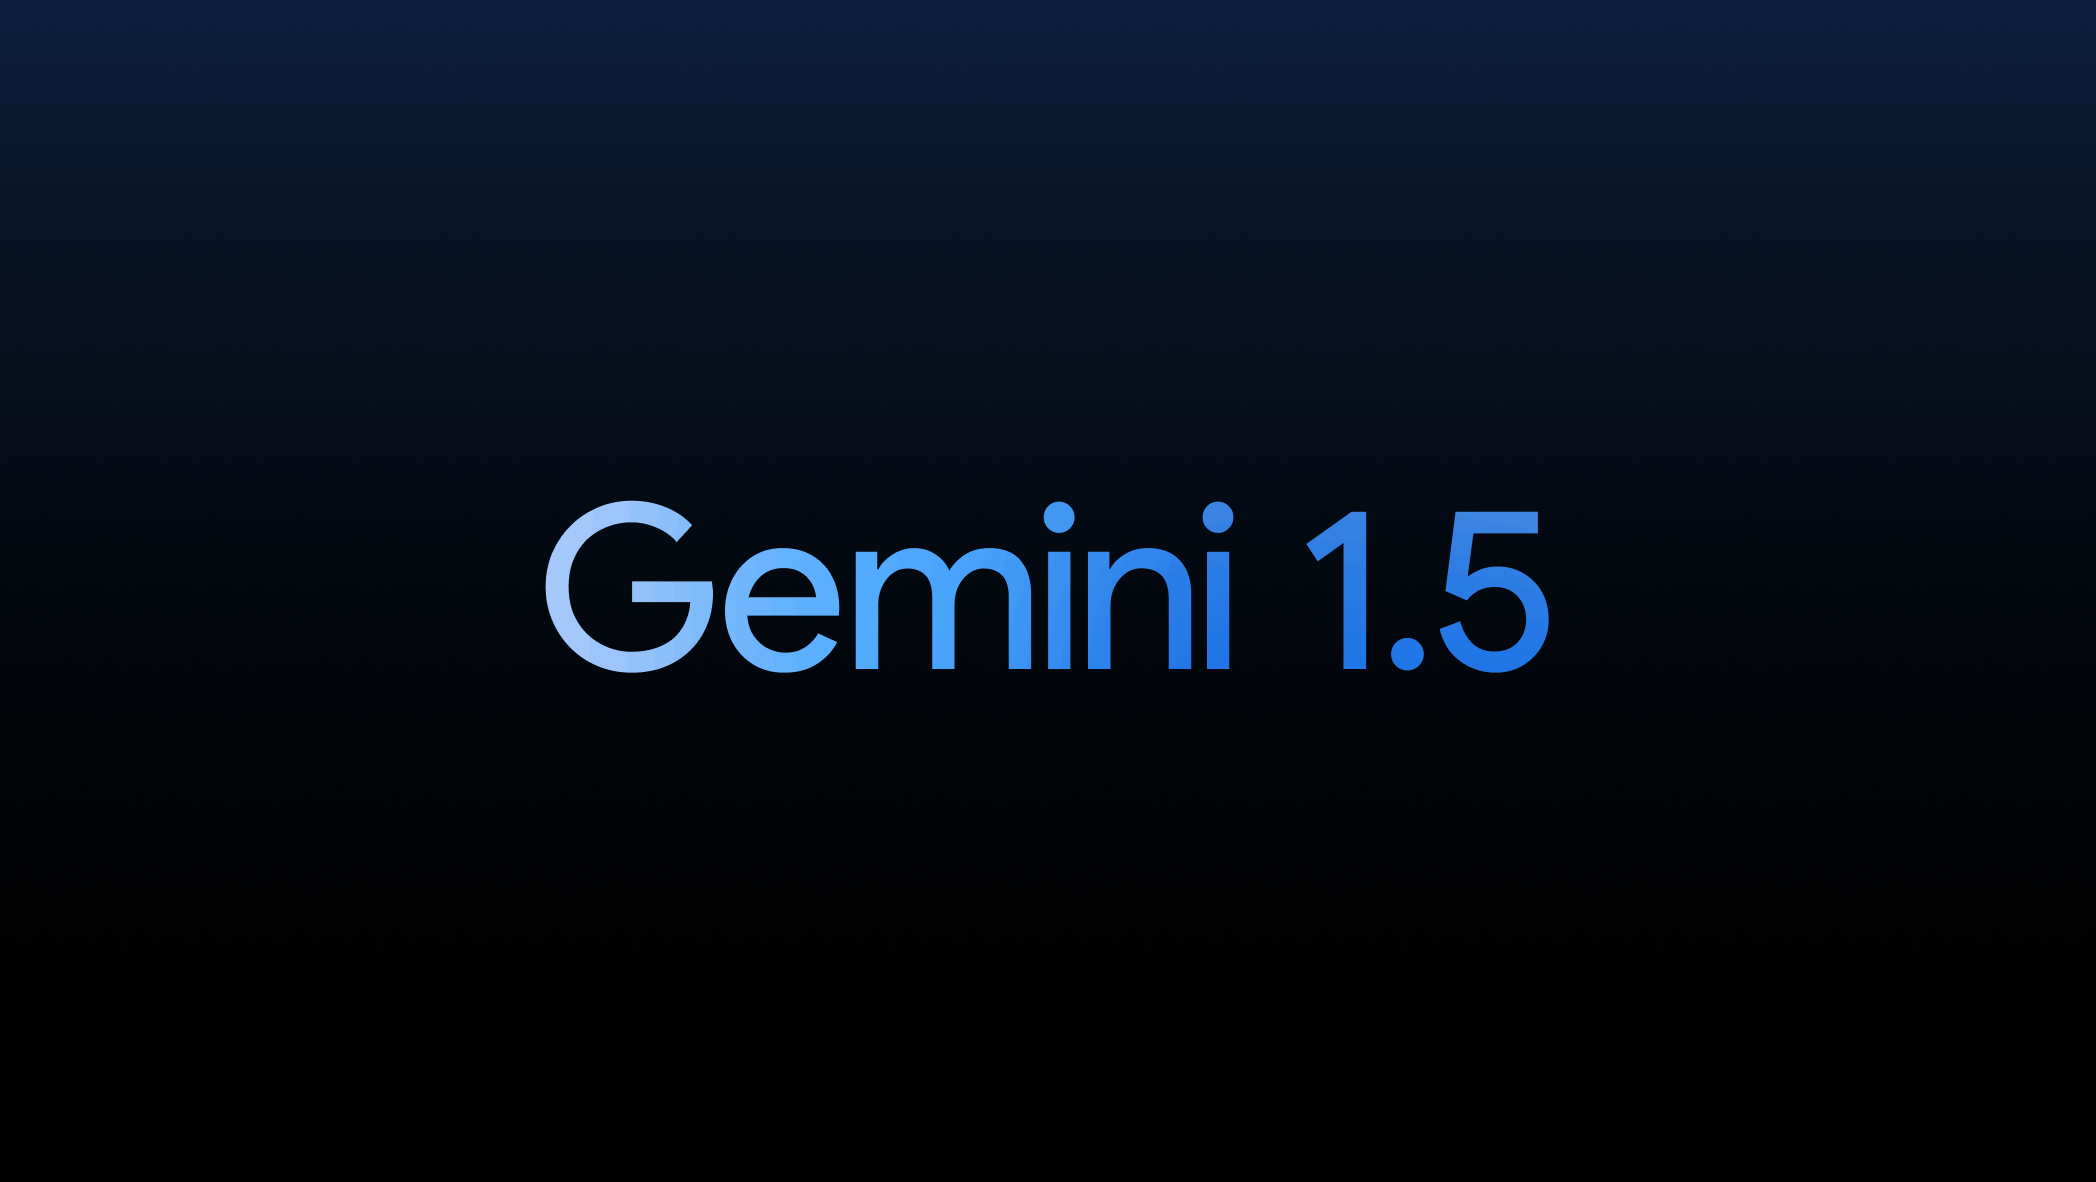 Google's next-generation model: Gemini 1.5